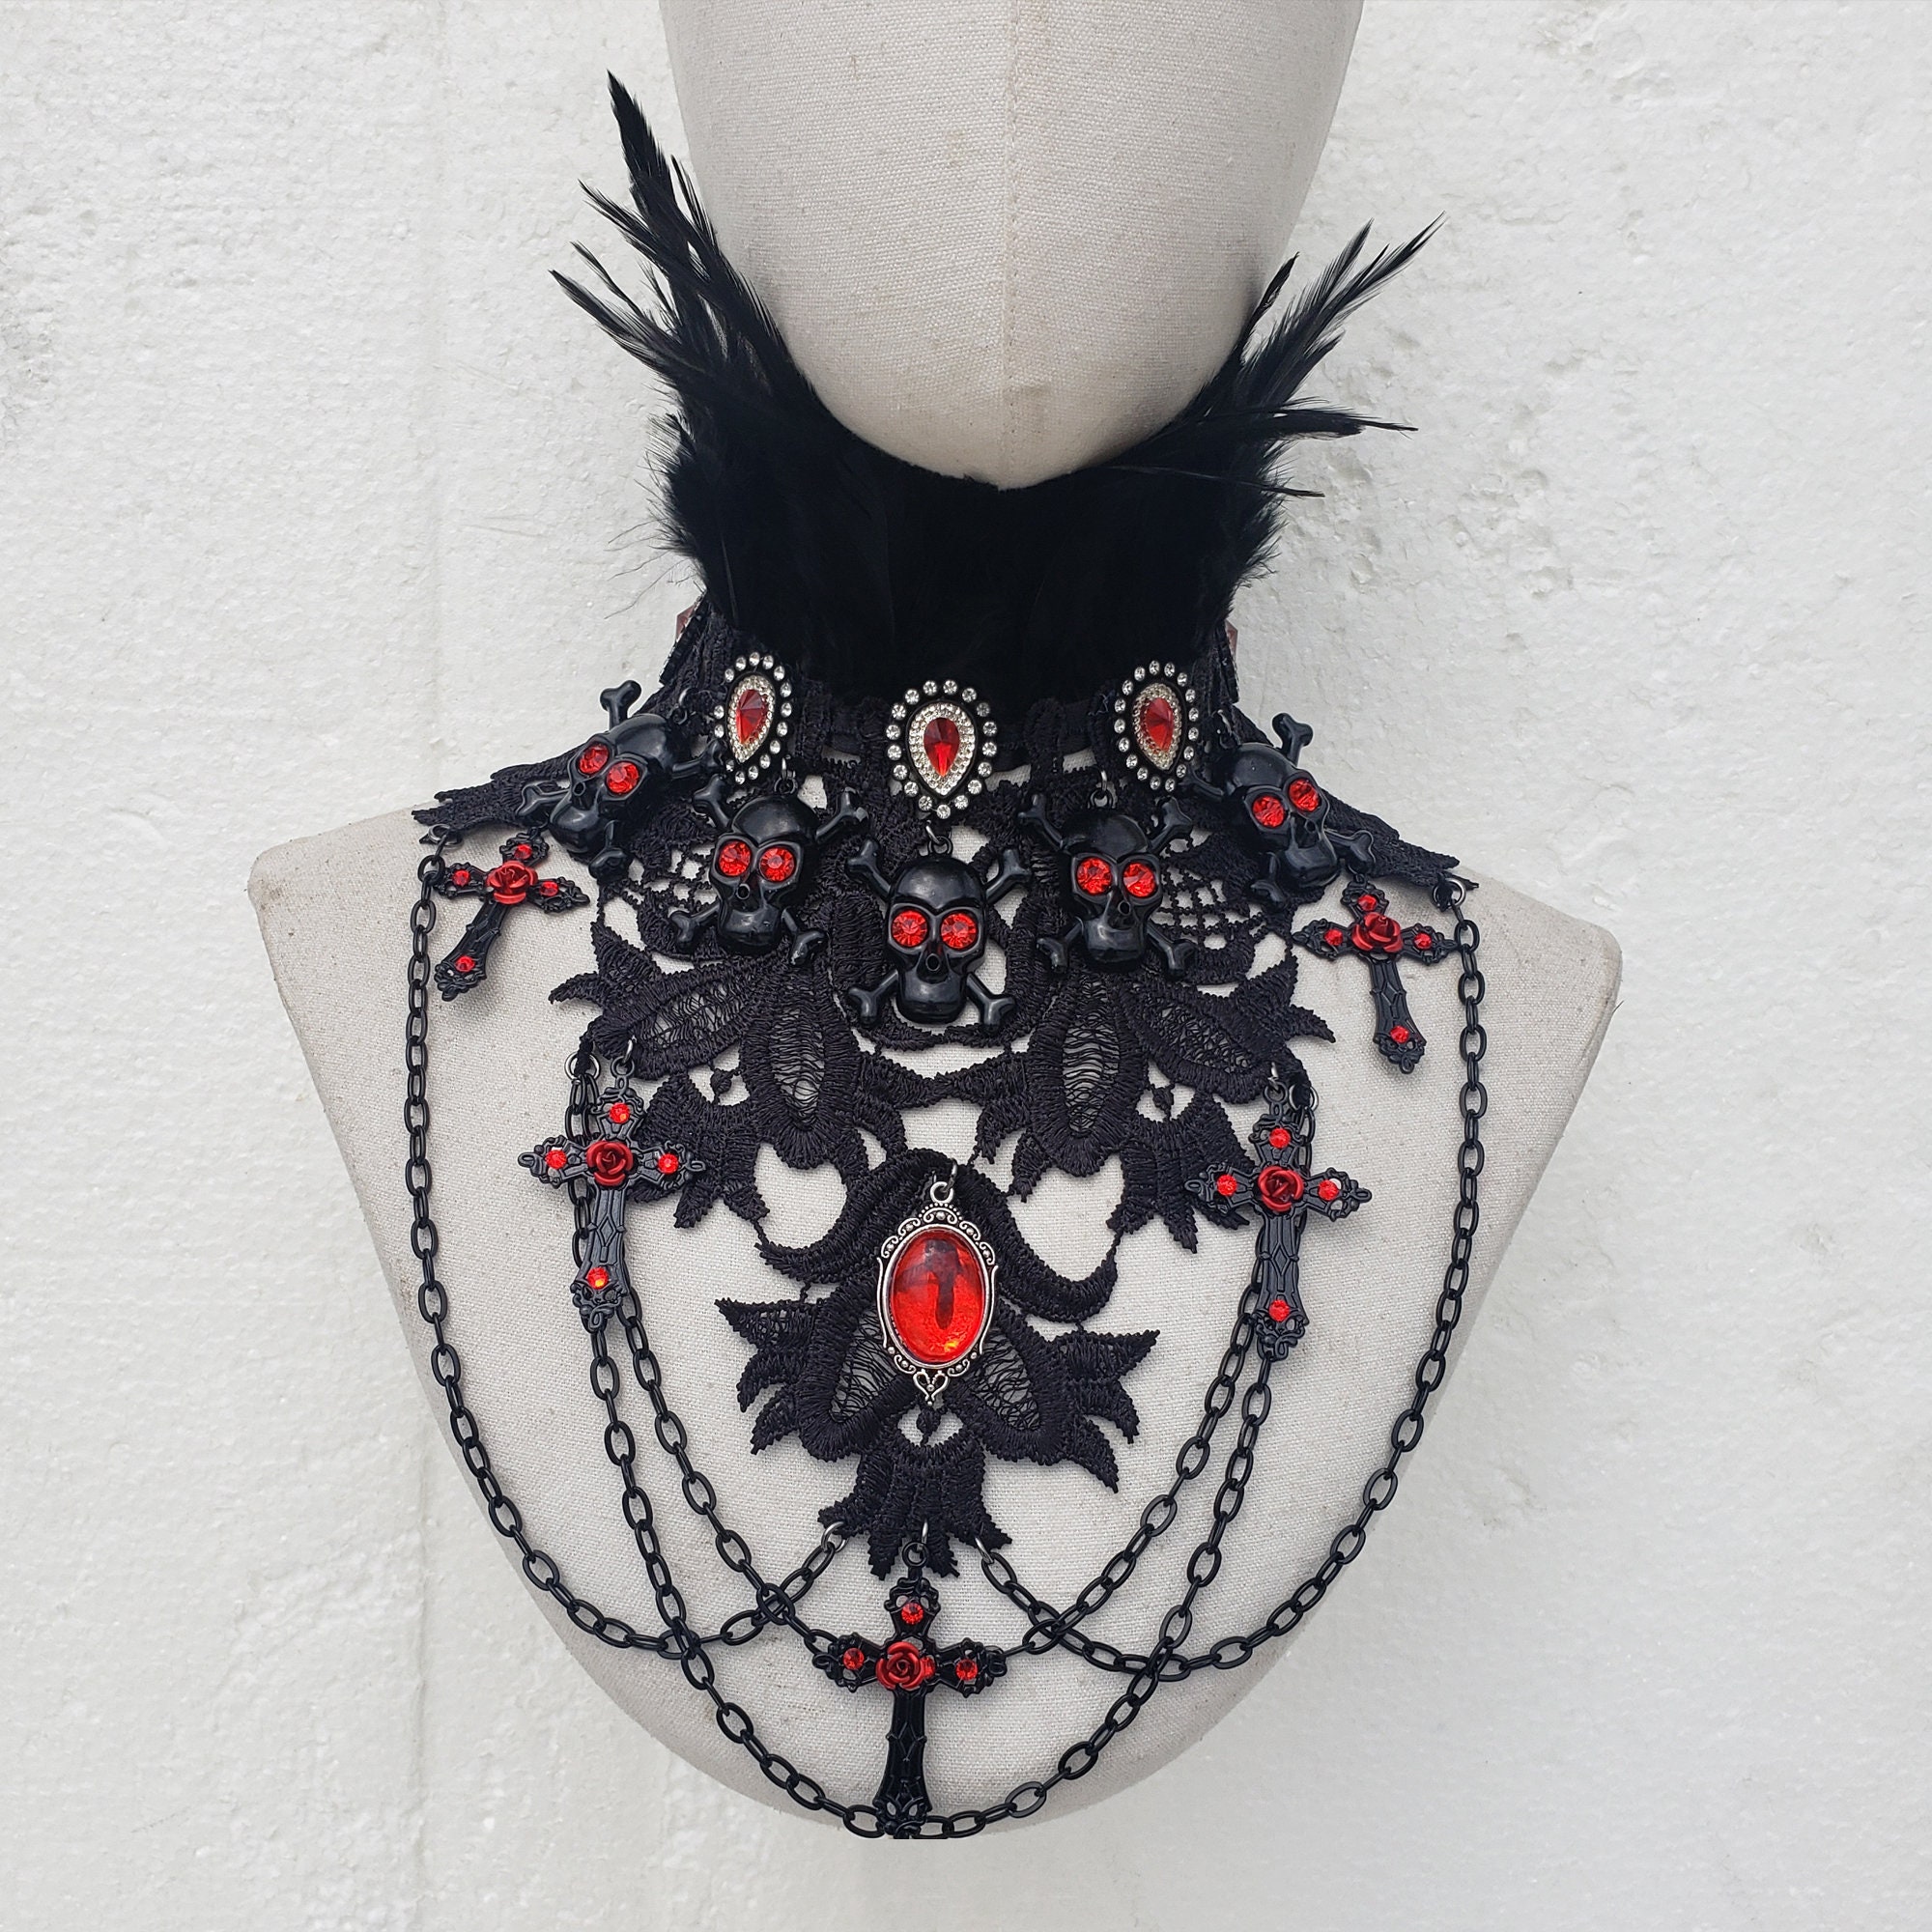 pinda Black Choker Necklace for Women Skull Cross Pendant Lace Goth Vampire  Chain Choker Handmade Halloween Witch Gothic Collar Jewelry